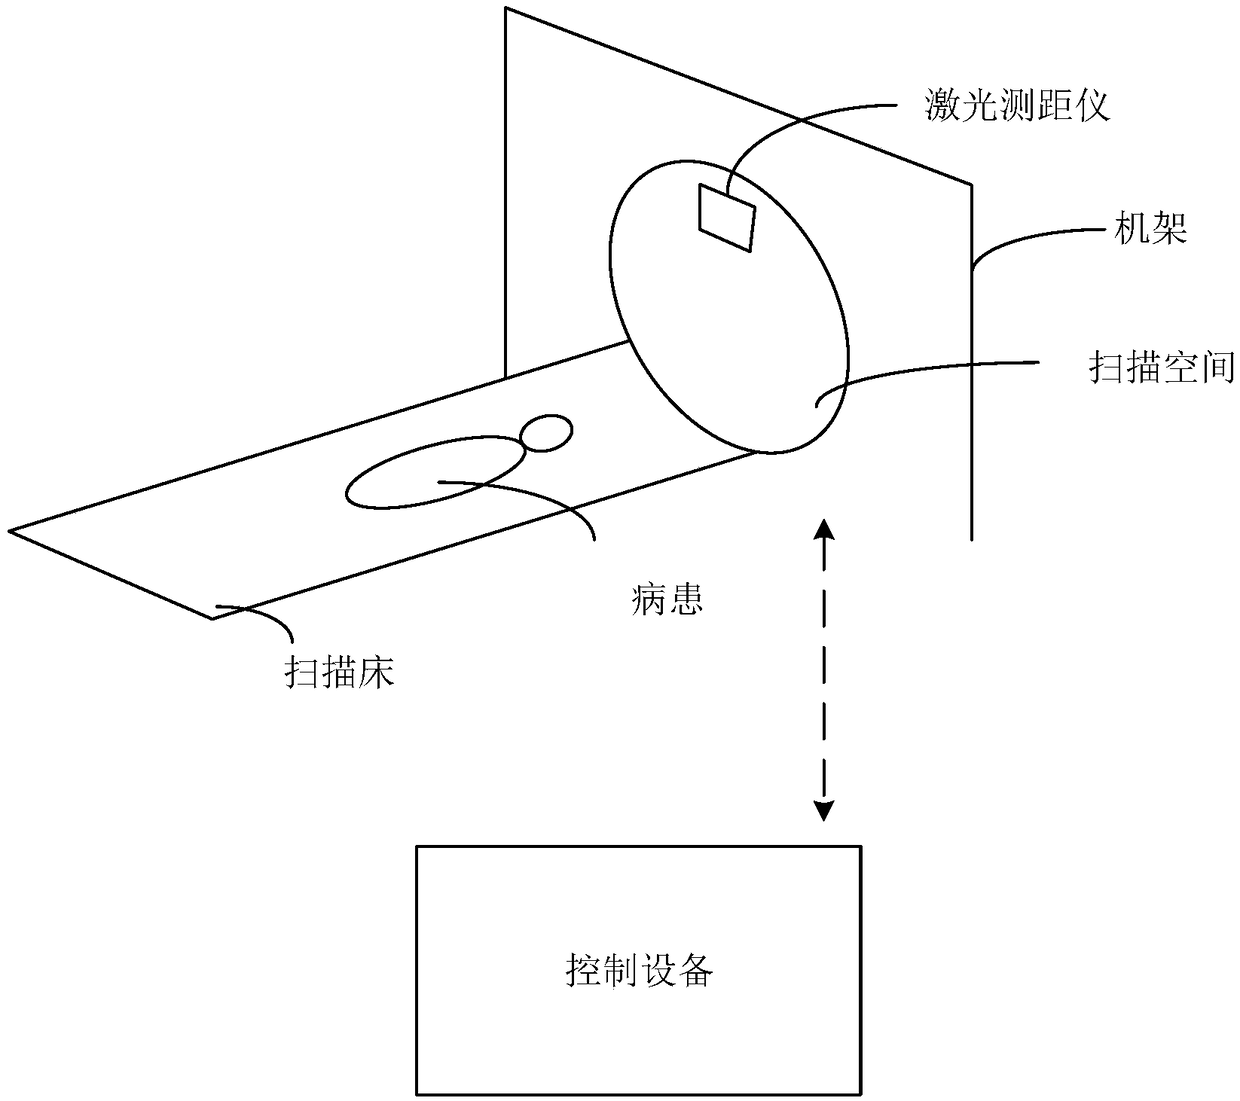 Method of positioning area under scanning, system and storage medium